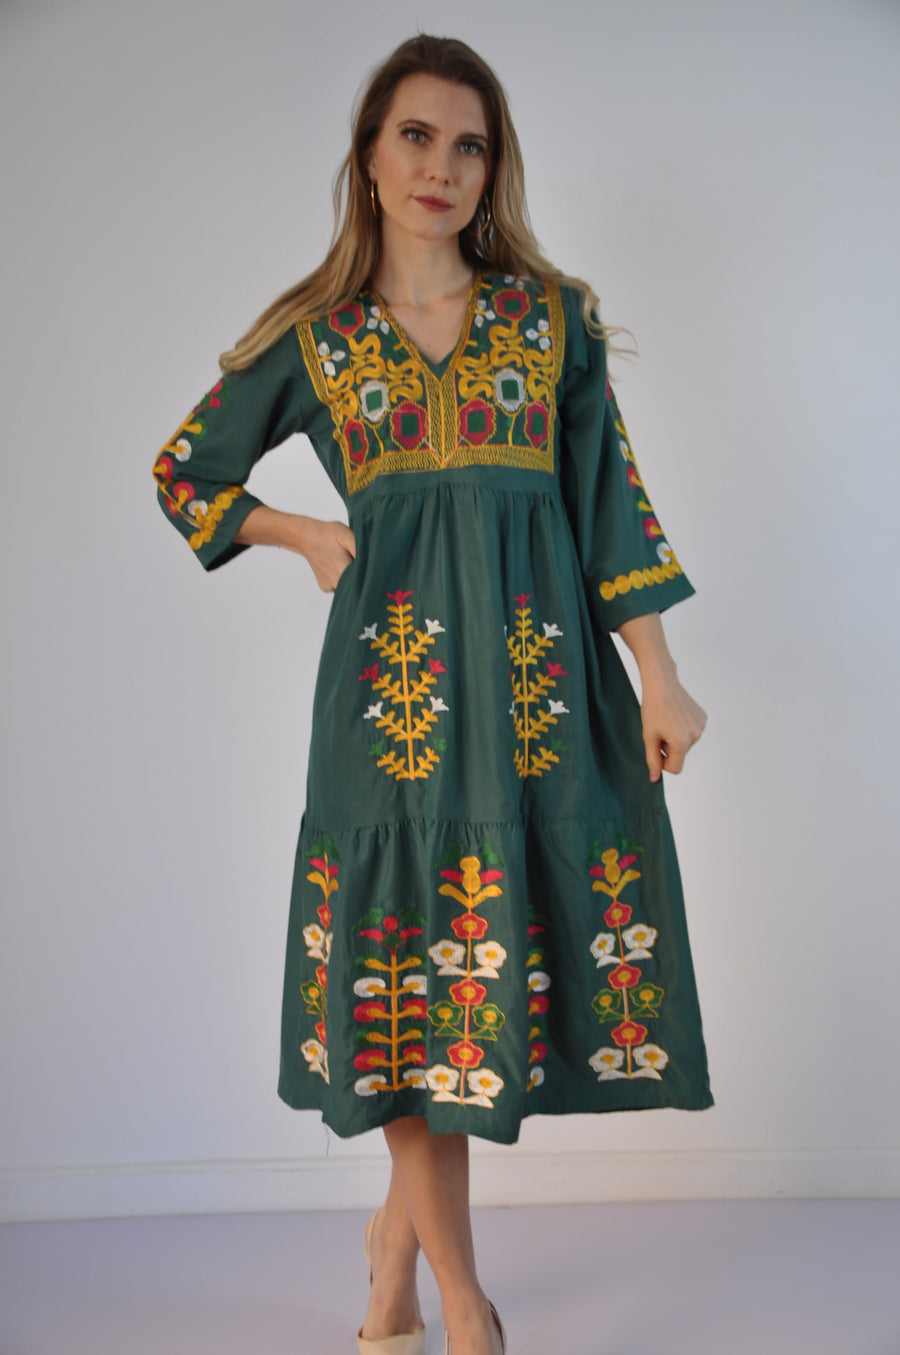 Short Tunic, Long sleeve embroidered kaftan dress, Boho embroidery tunic dress, Egyptian cotton. Autumn, beach, resorts, Gypsy dress.